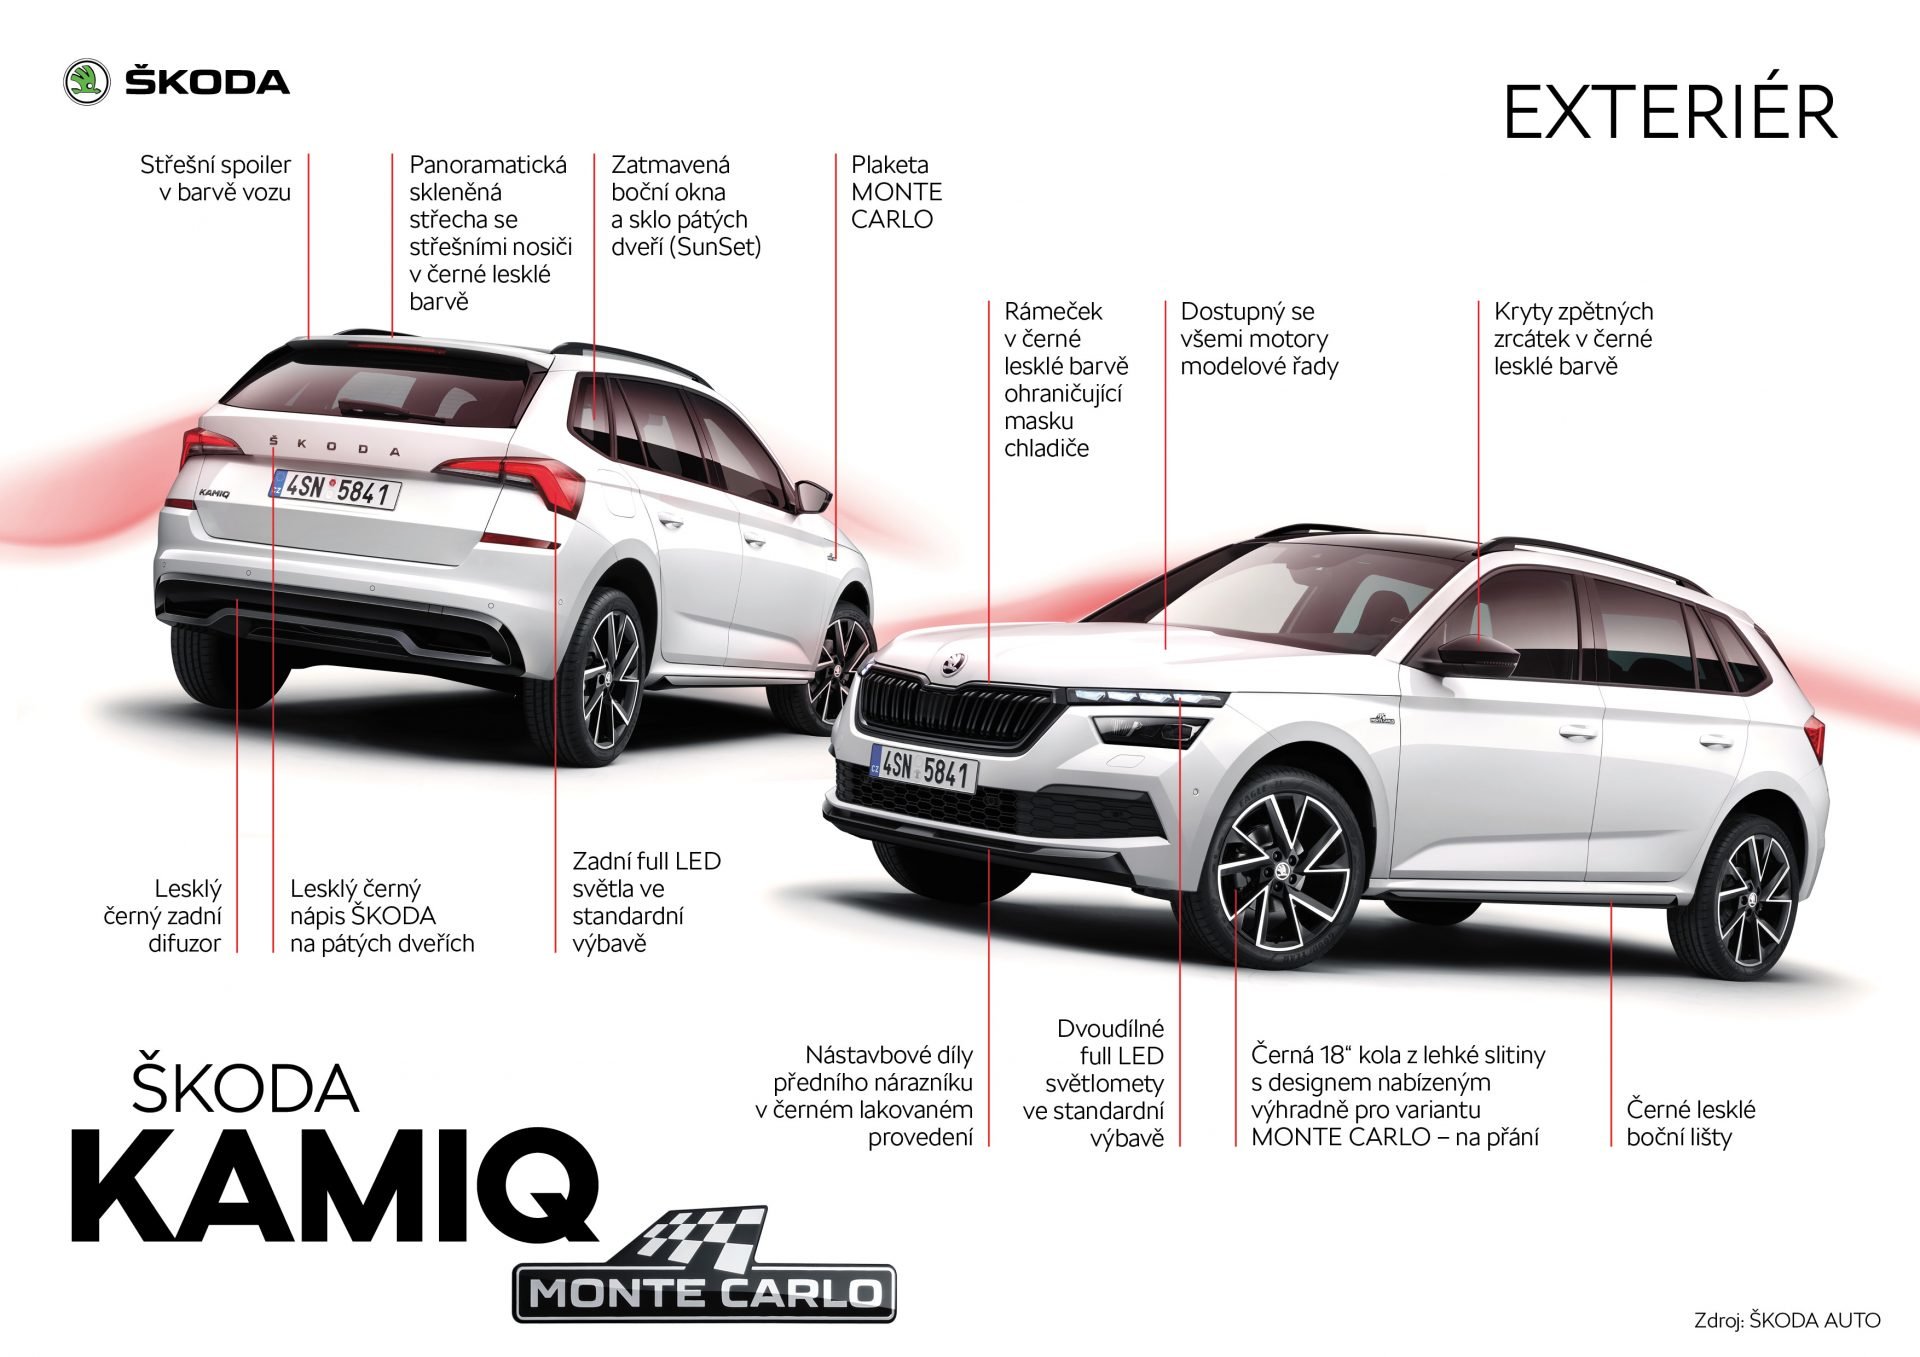 Škoda Kamiq MC exterier